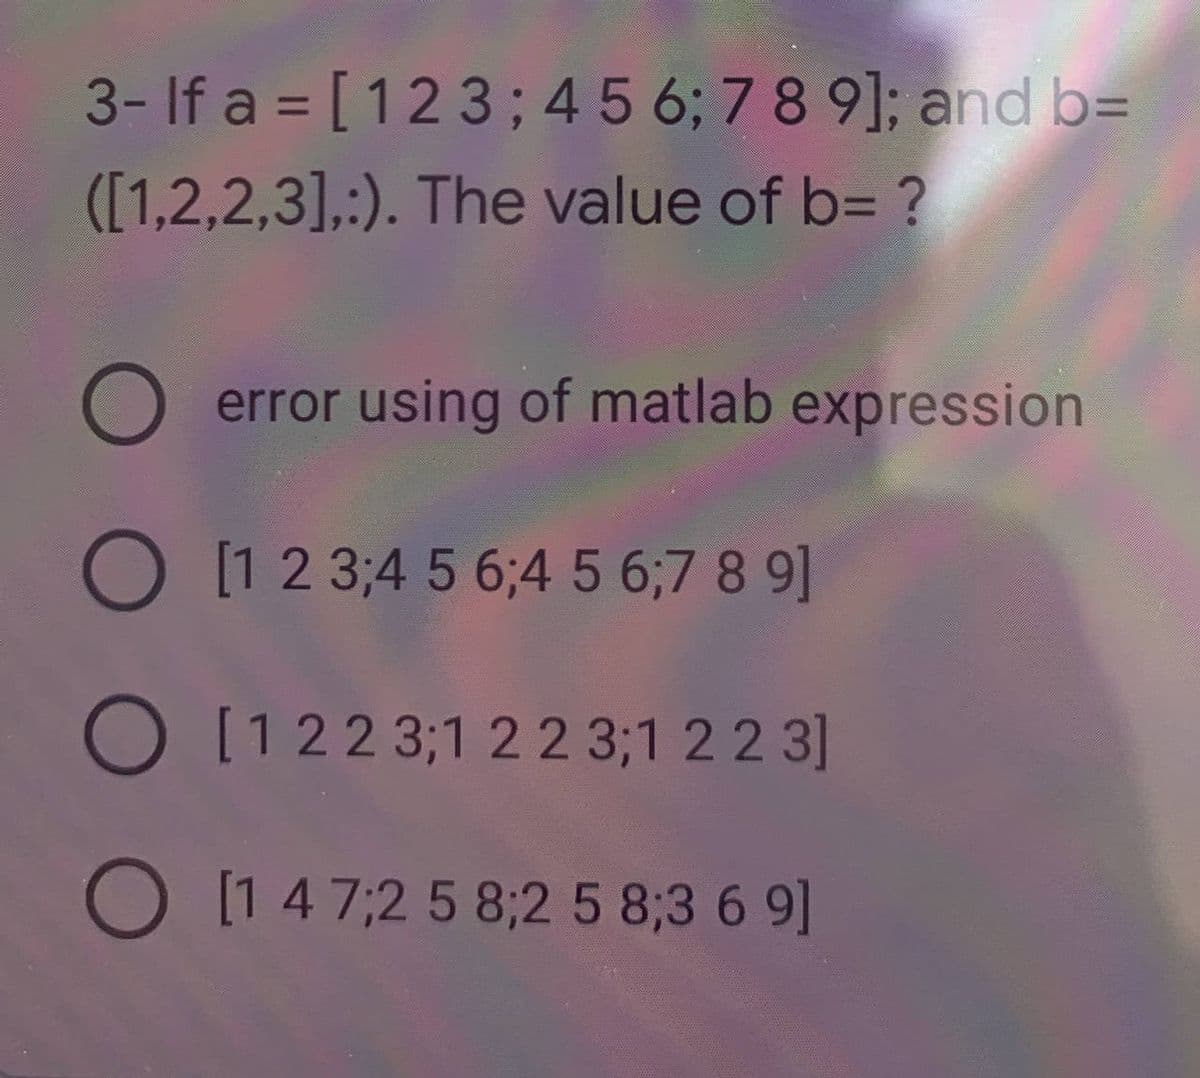 3- If a = [123; 4 5 6; 7 8 9]; and b=
([1,2,2,3],:). The value of b= ?
O
error using of matlab expression
O [1 2 3 4 5 6;4 5 6;7 8 9]
O [1223;1 2 2 3;1 2 2 3]
O [1 4 7,2 5 8;2 5 8;3 6 9]